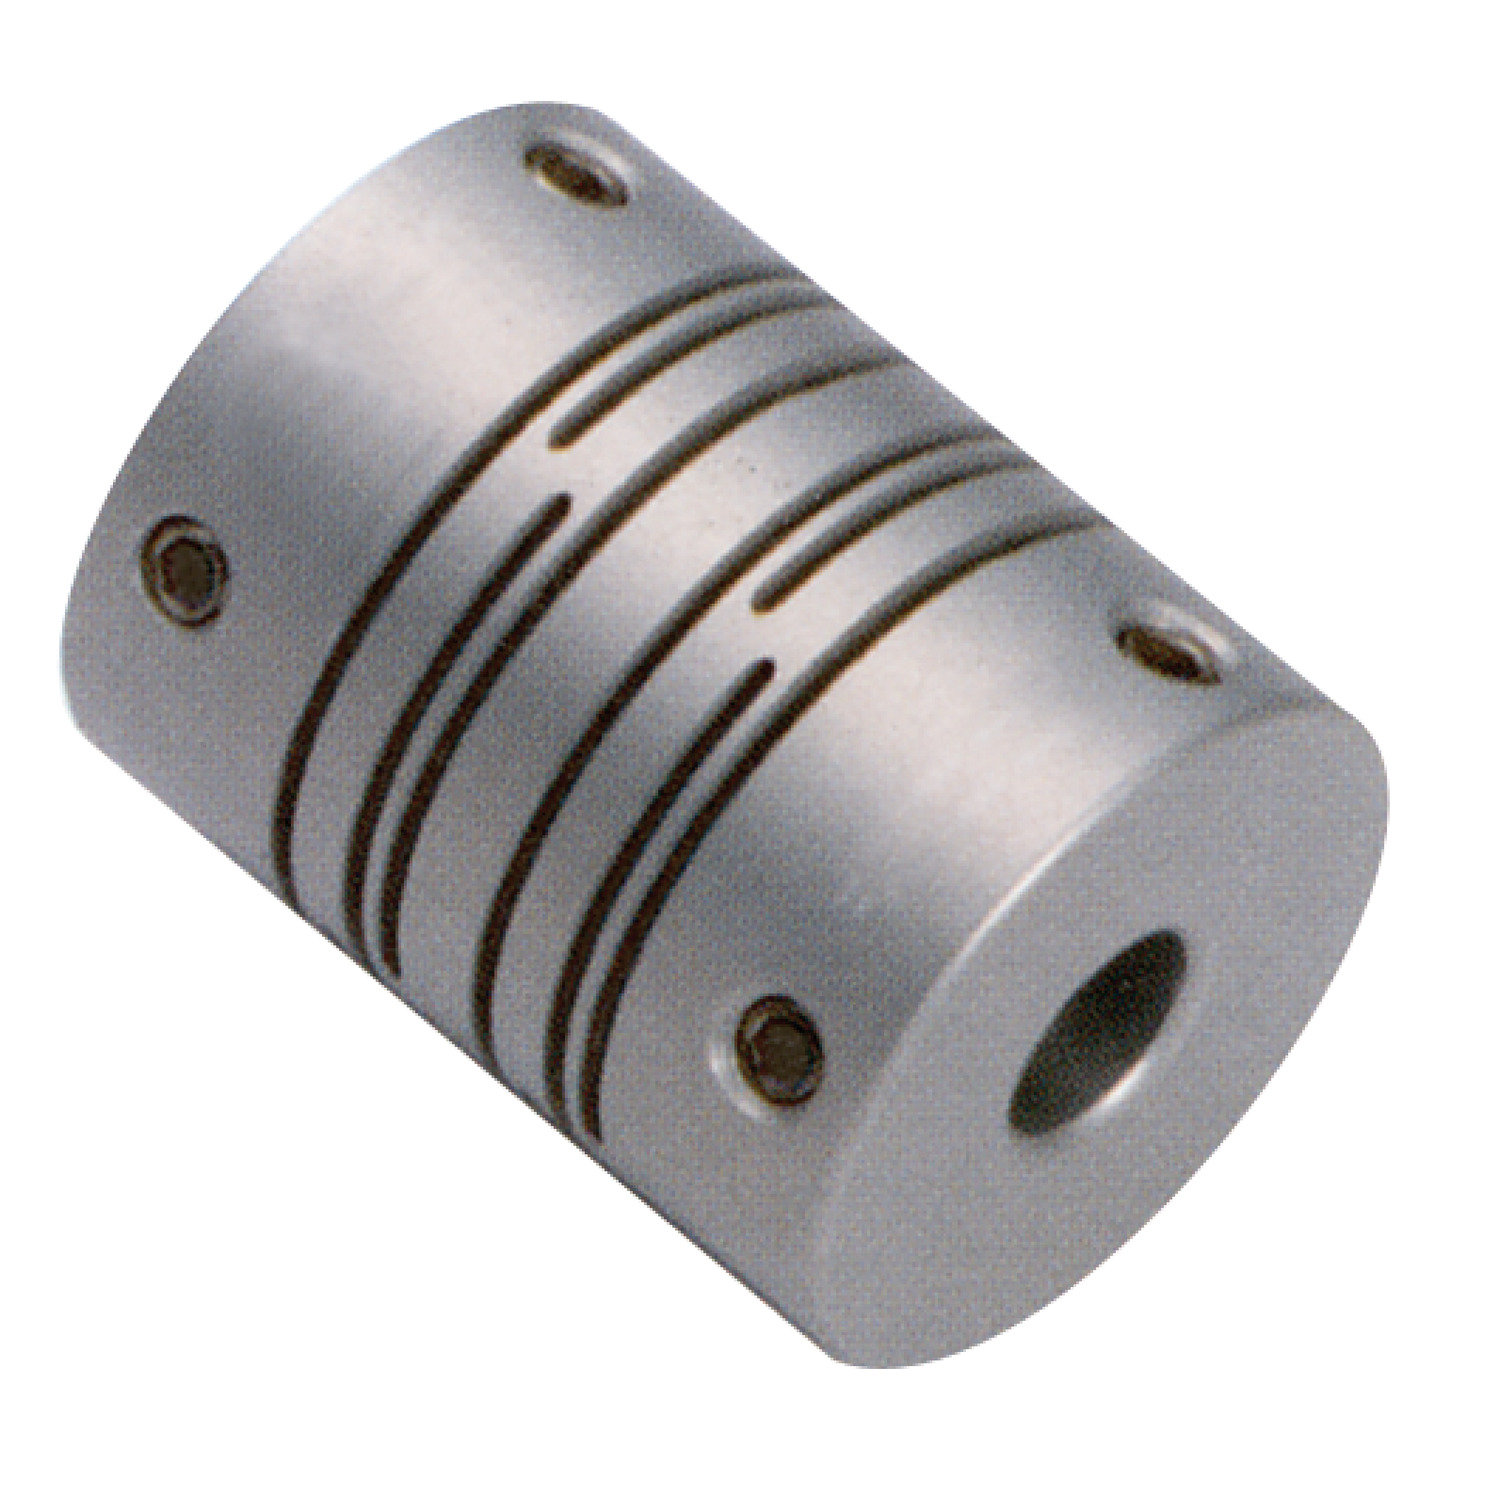 Product R3003.1, Spiral Beam Coupling - Aluminium set screw - long type / 